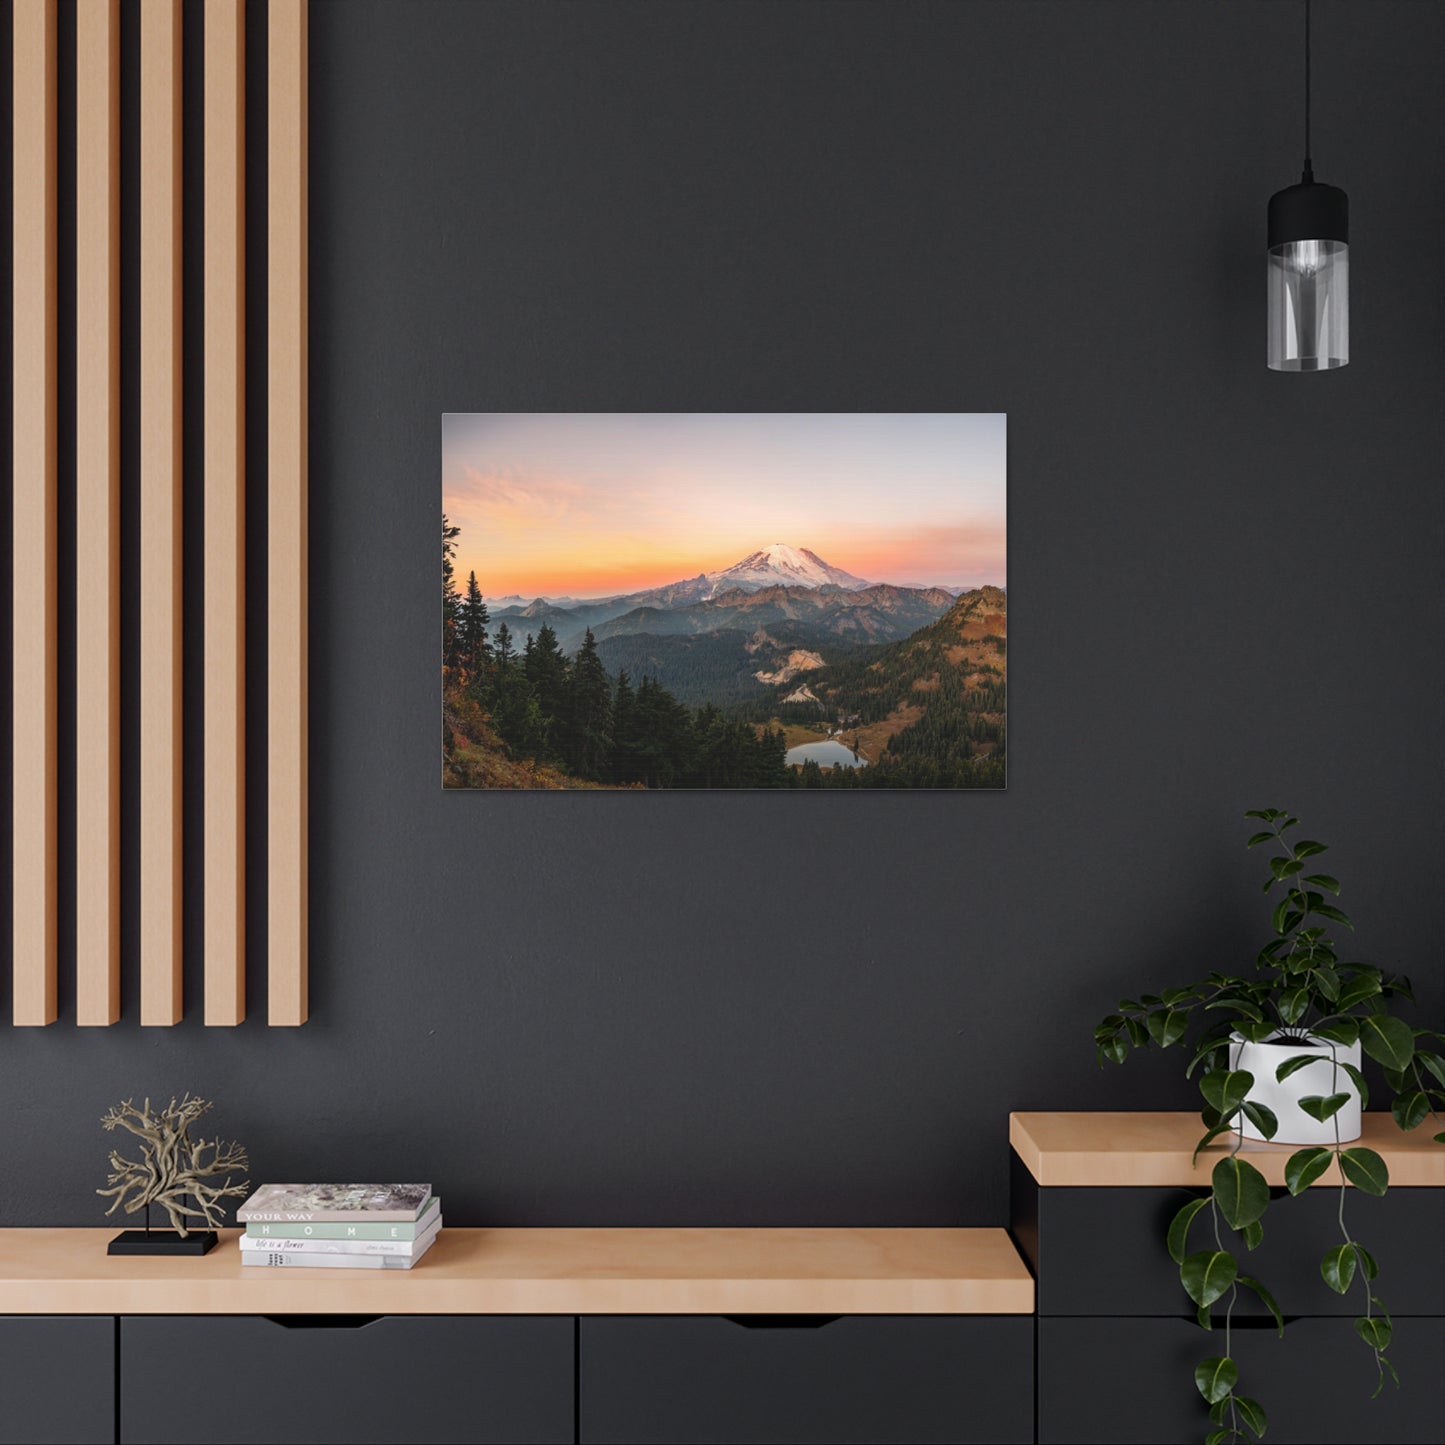 Sunrise Over Mount Rainier, Cascade Mountains, Washington - Canvas Wall Print (Free Shipping)